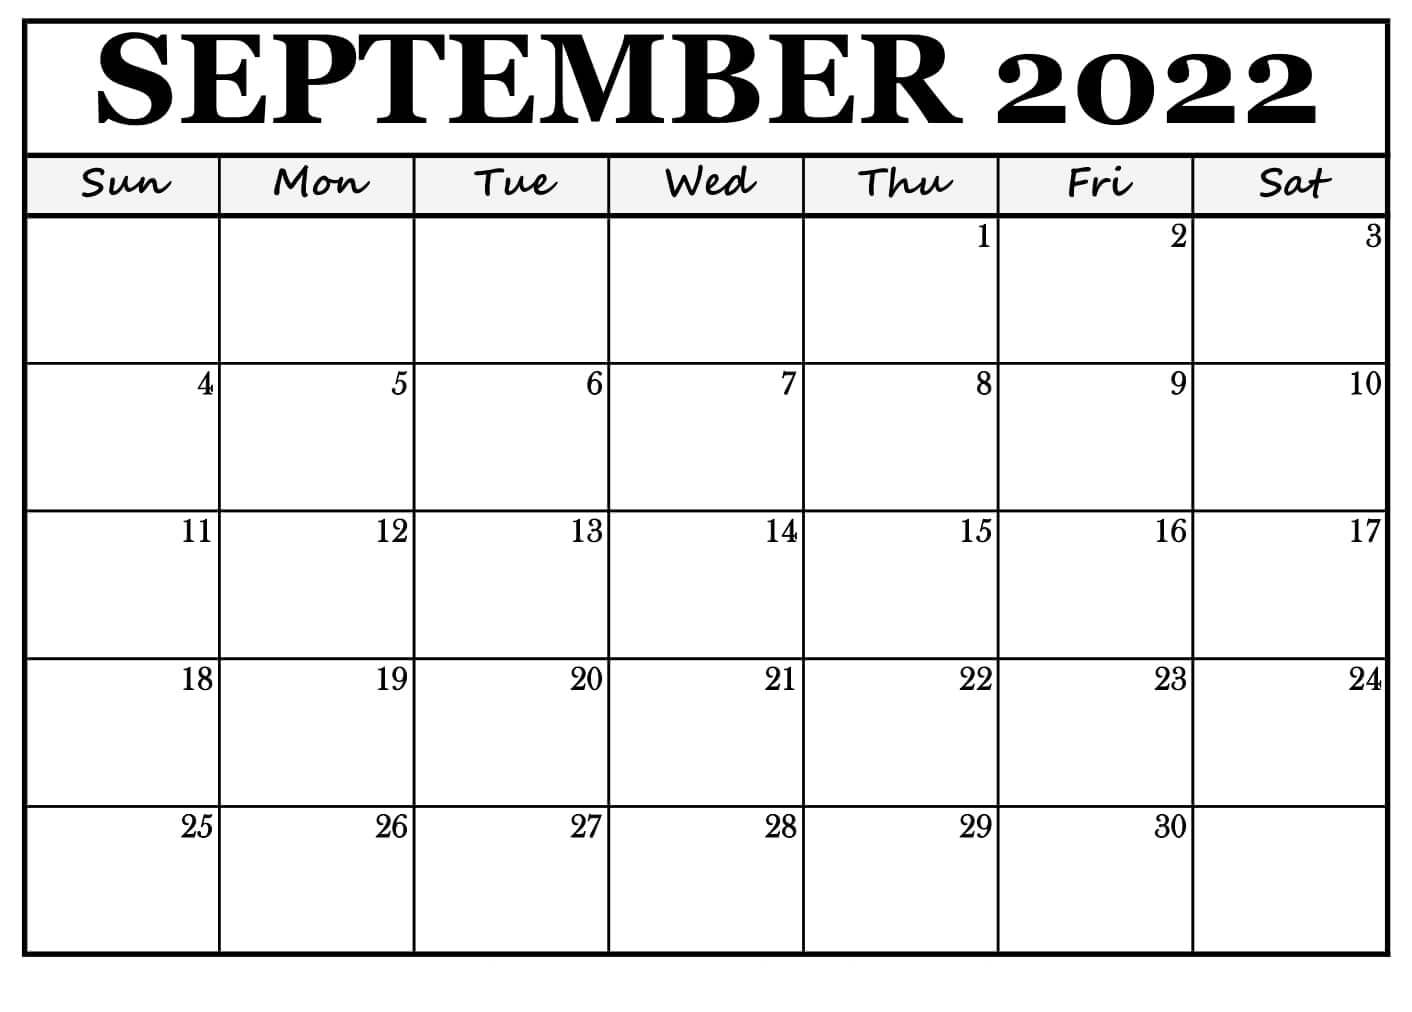 September 2022 Blank Calendar Template